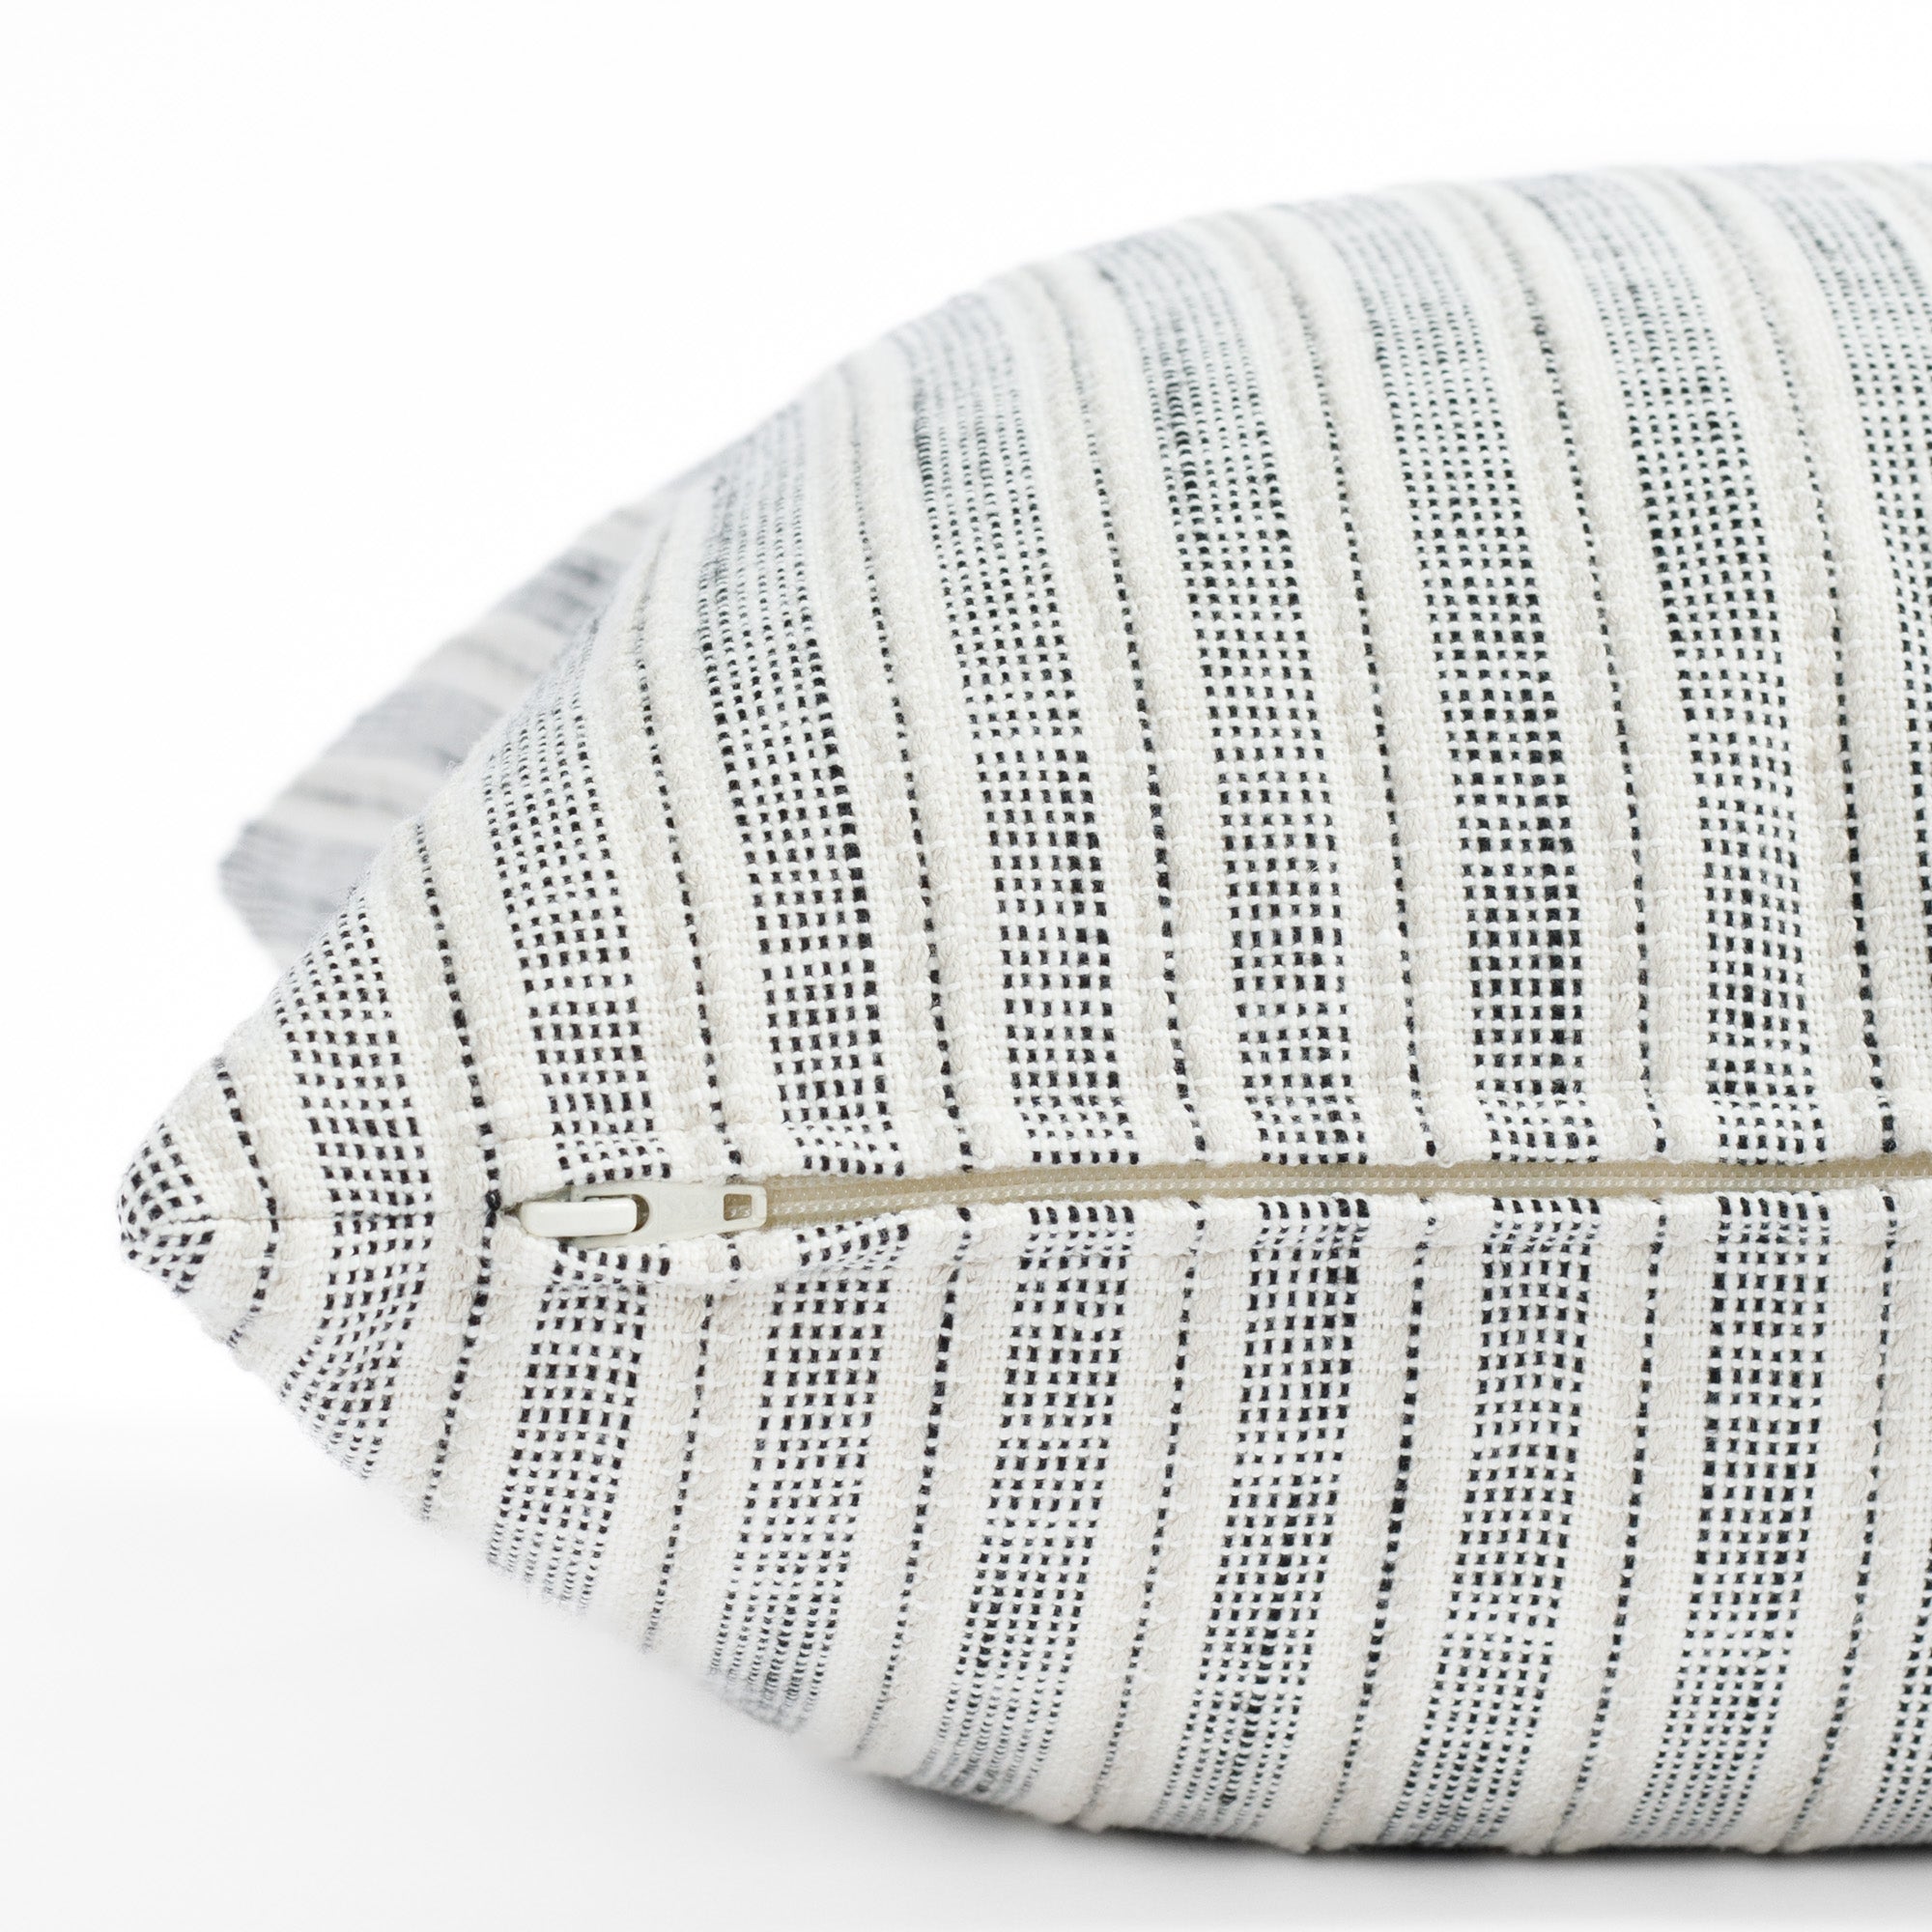 a cream and black stripe outdoor pillow : close up zipper view